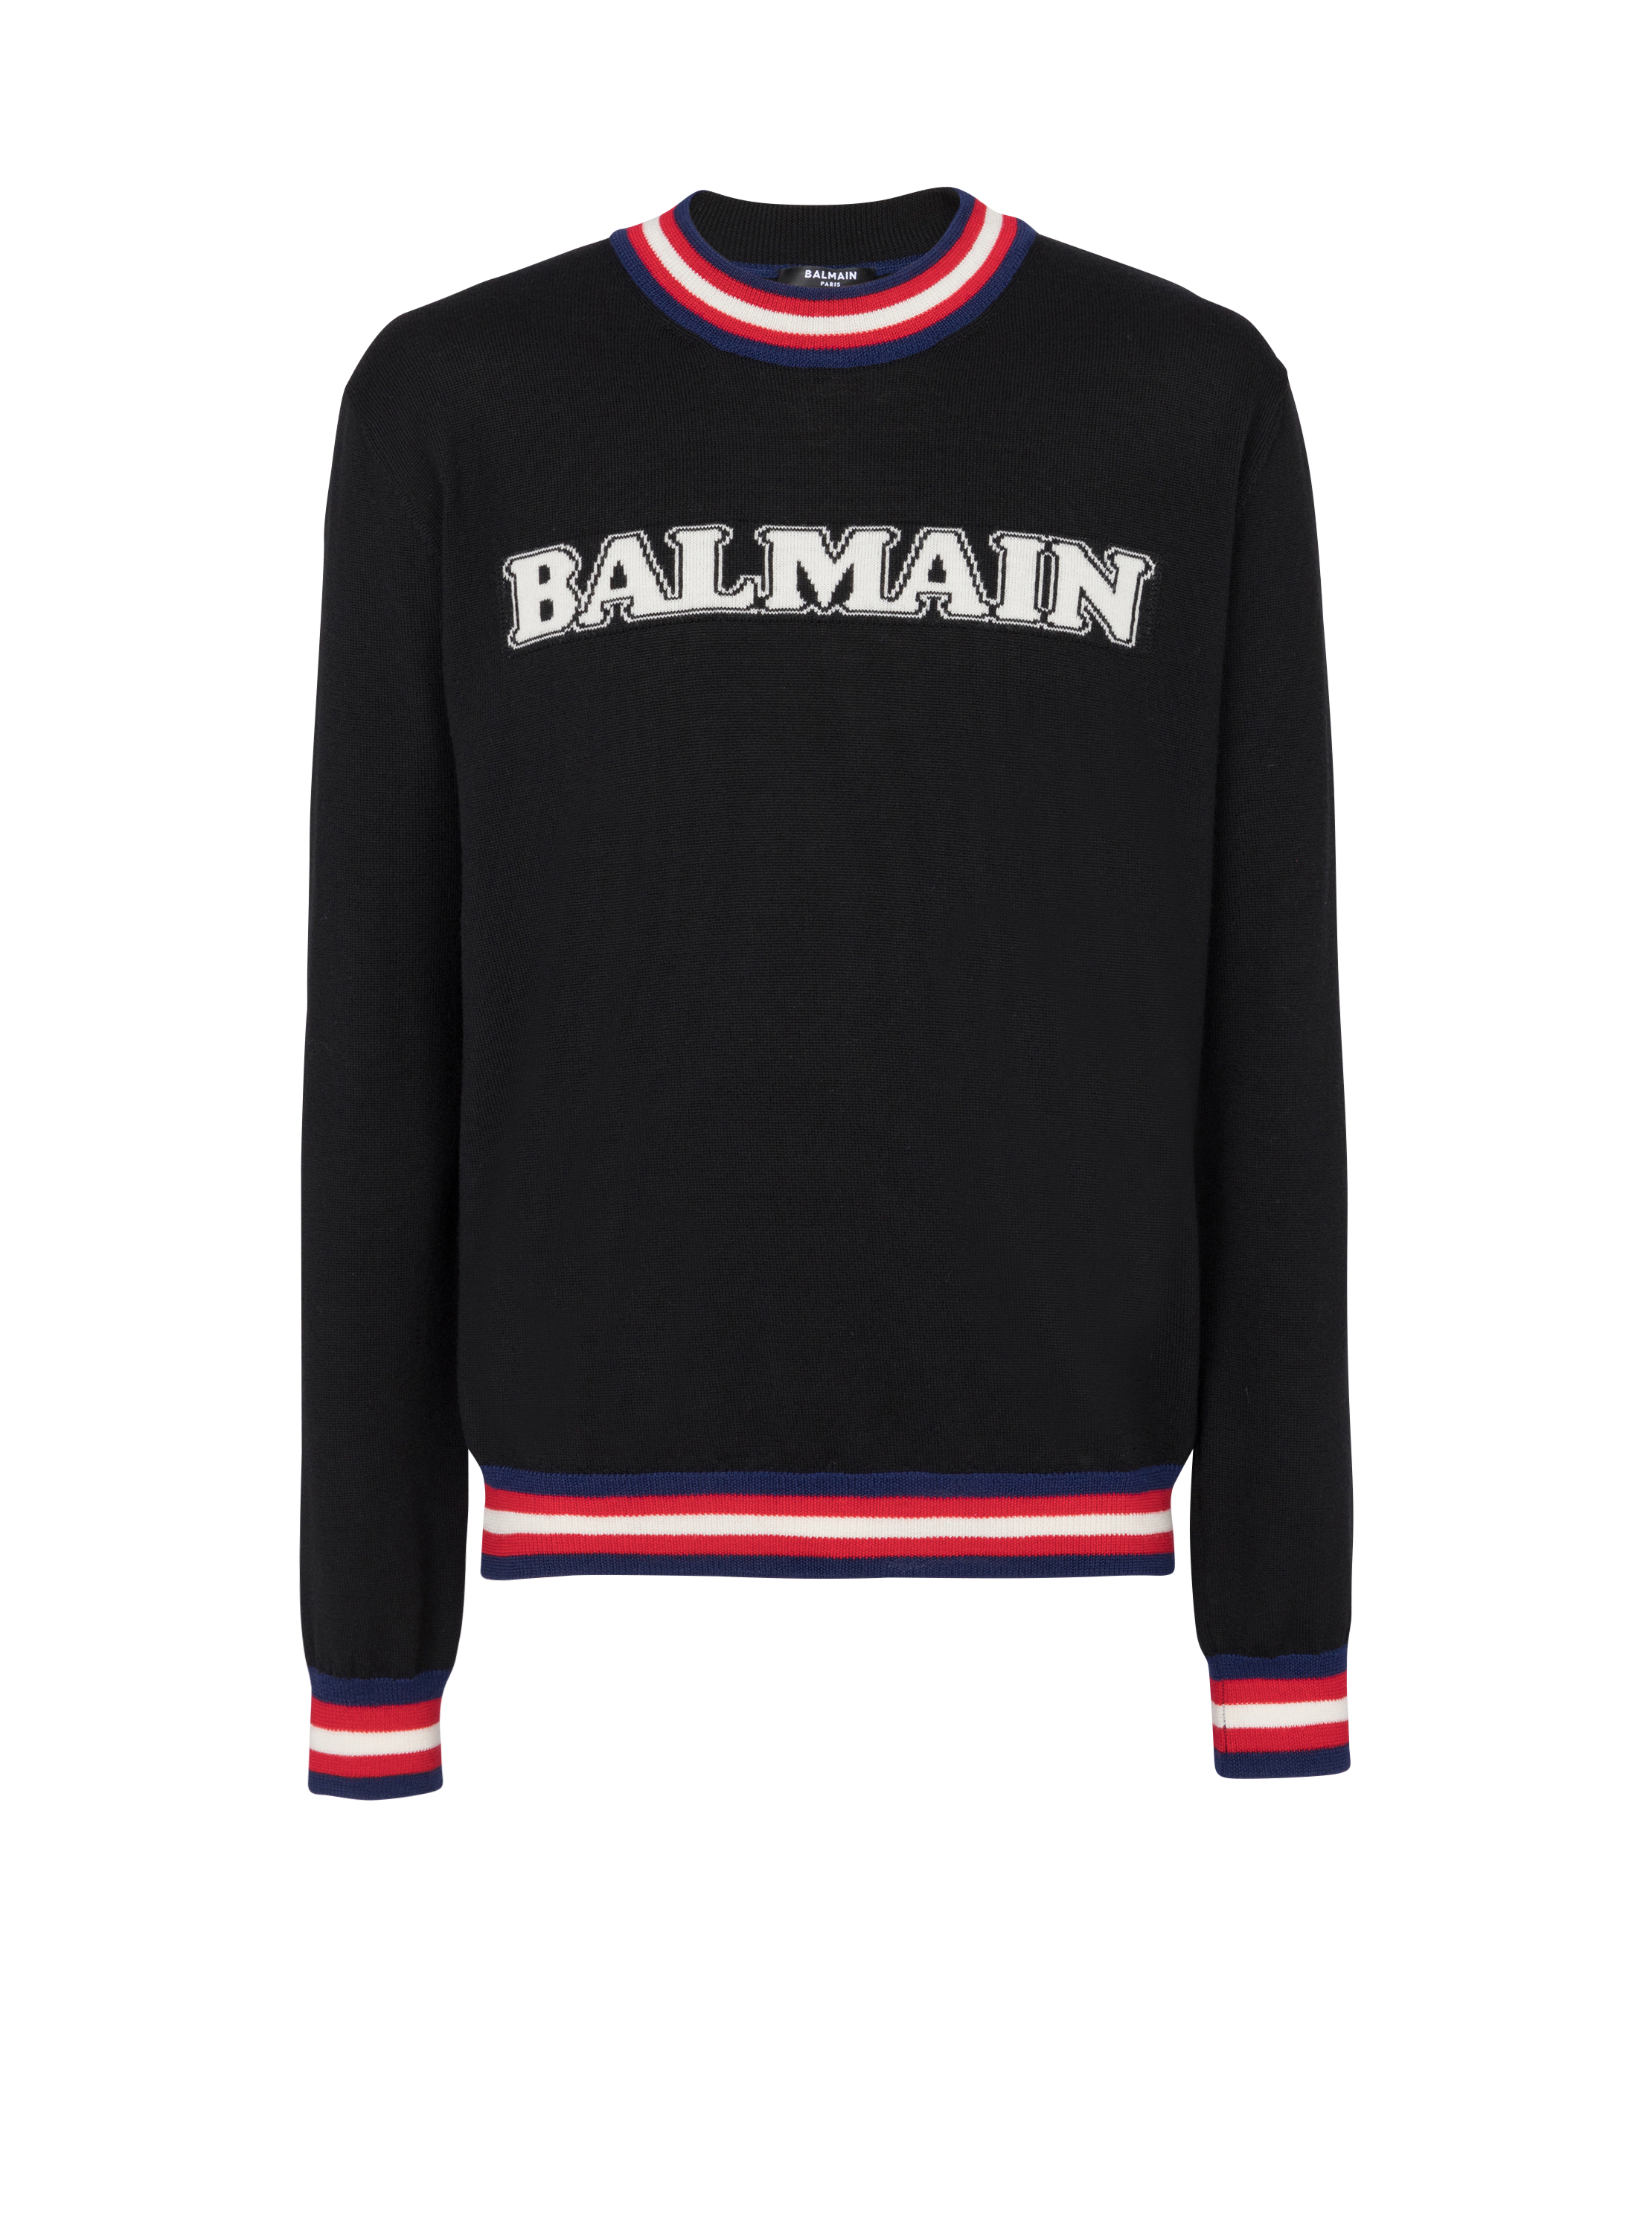 Retro Balmain jumper in fine merino knit, black, hi-res